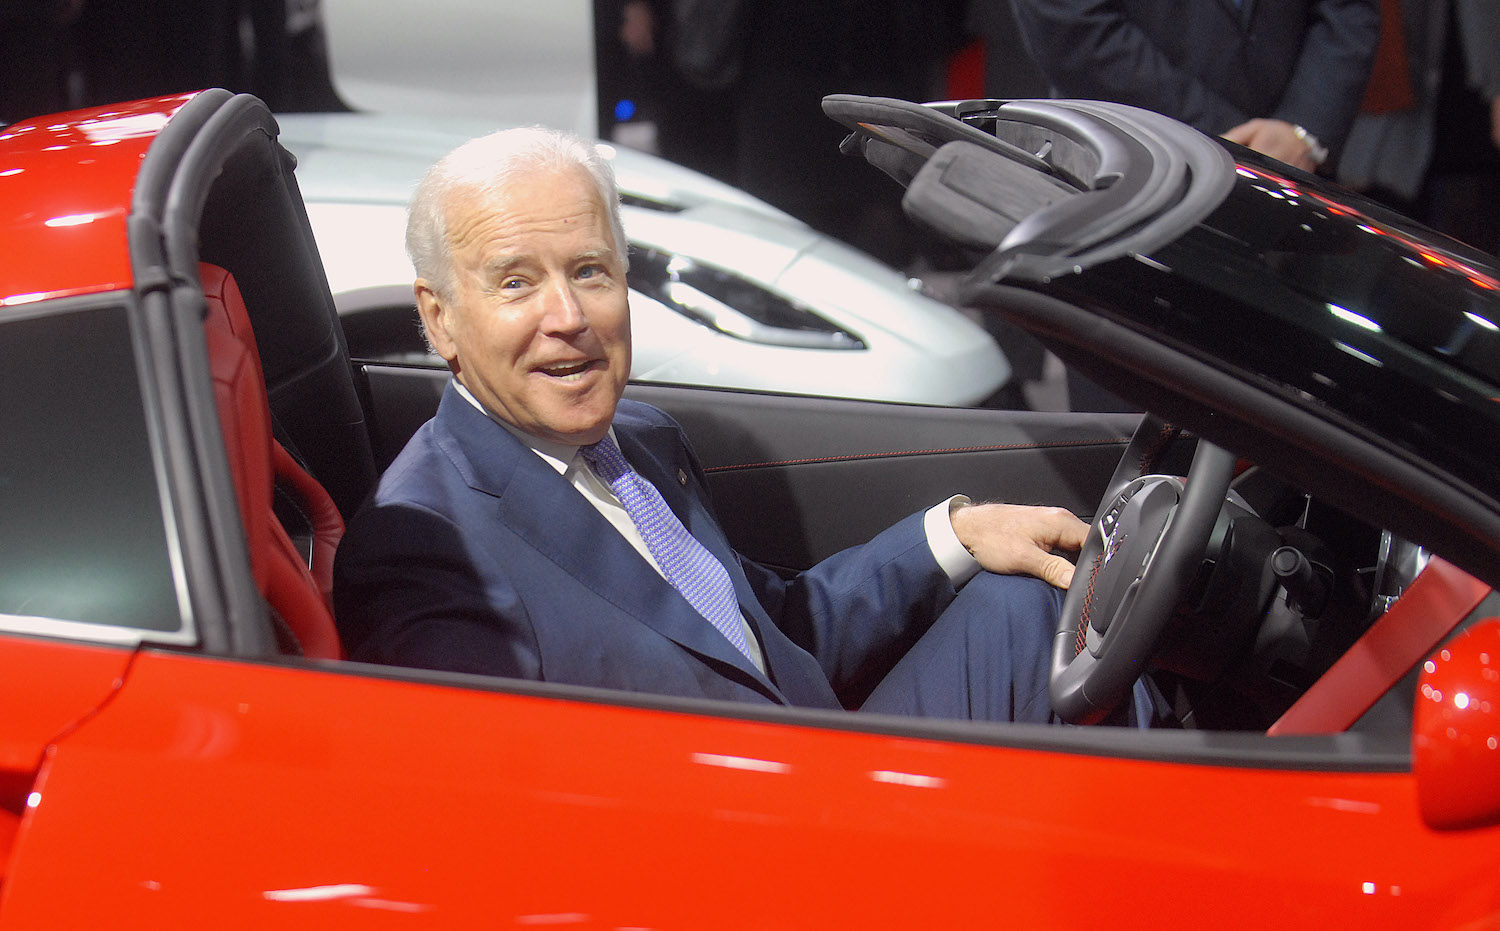 Joe Biden behind the wheel of a Corvette